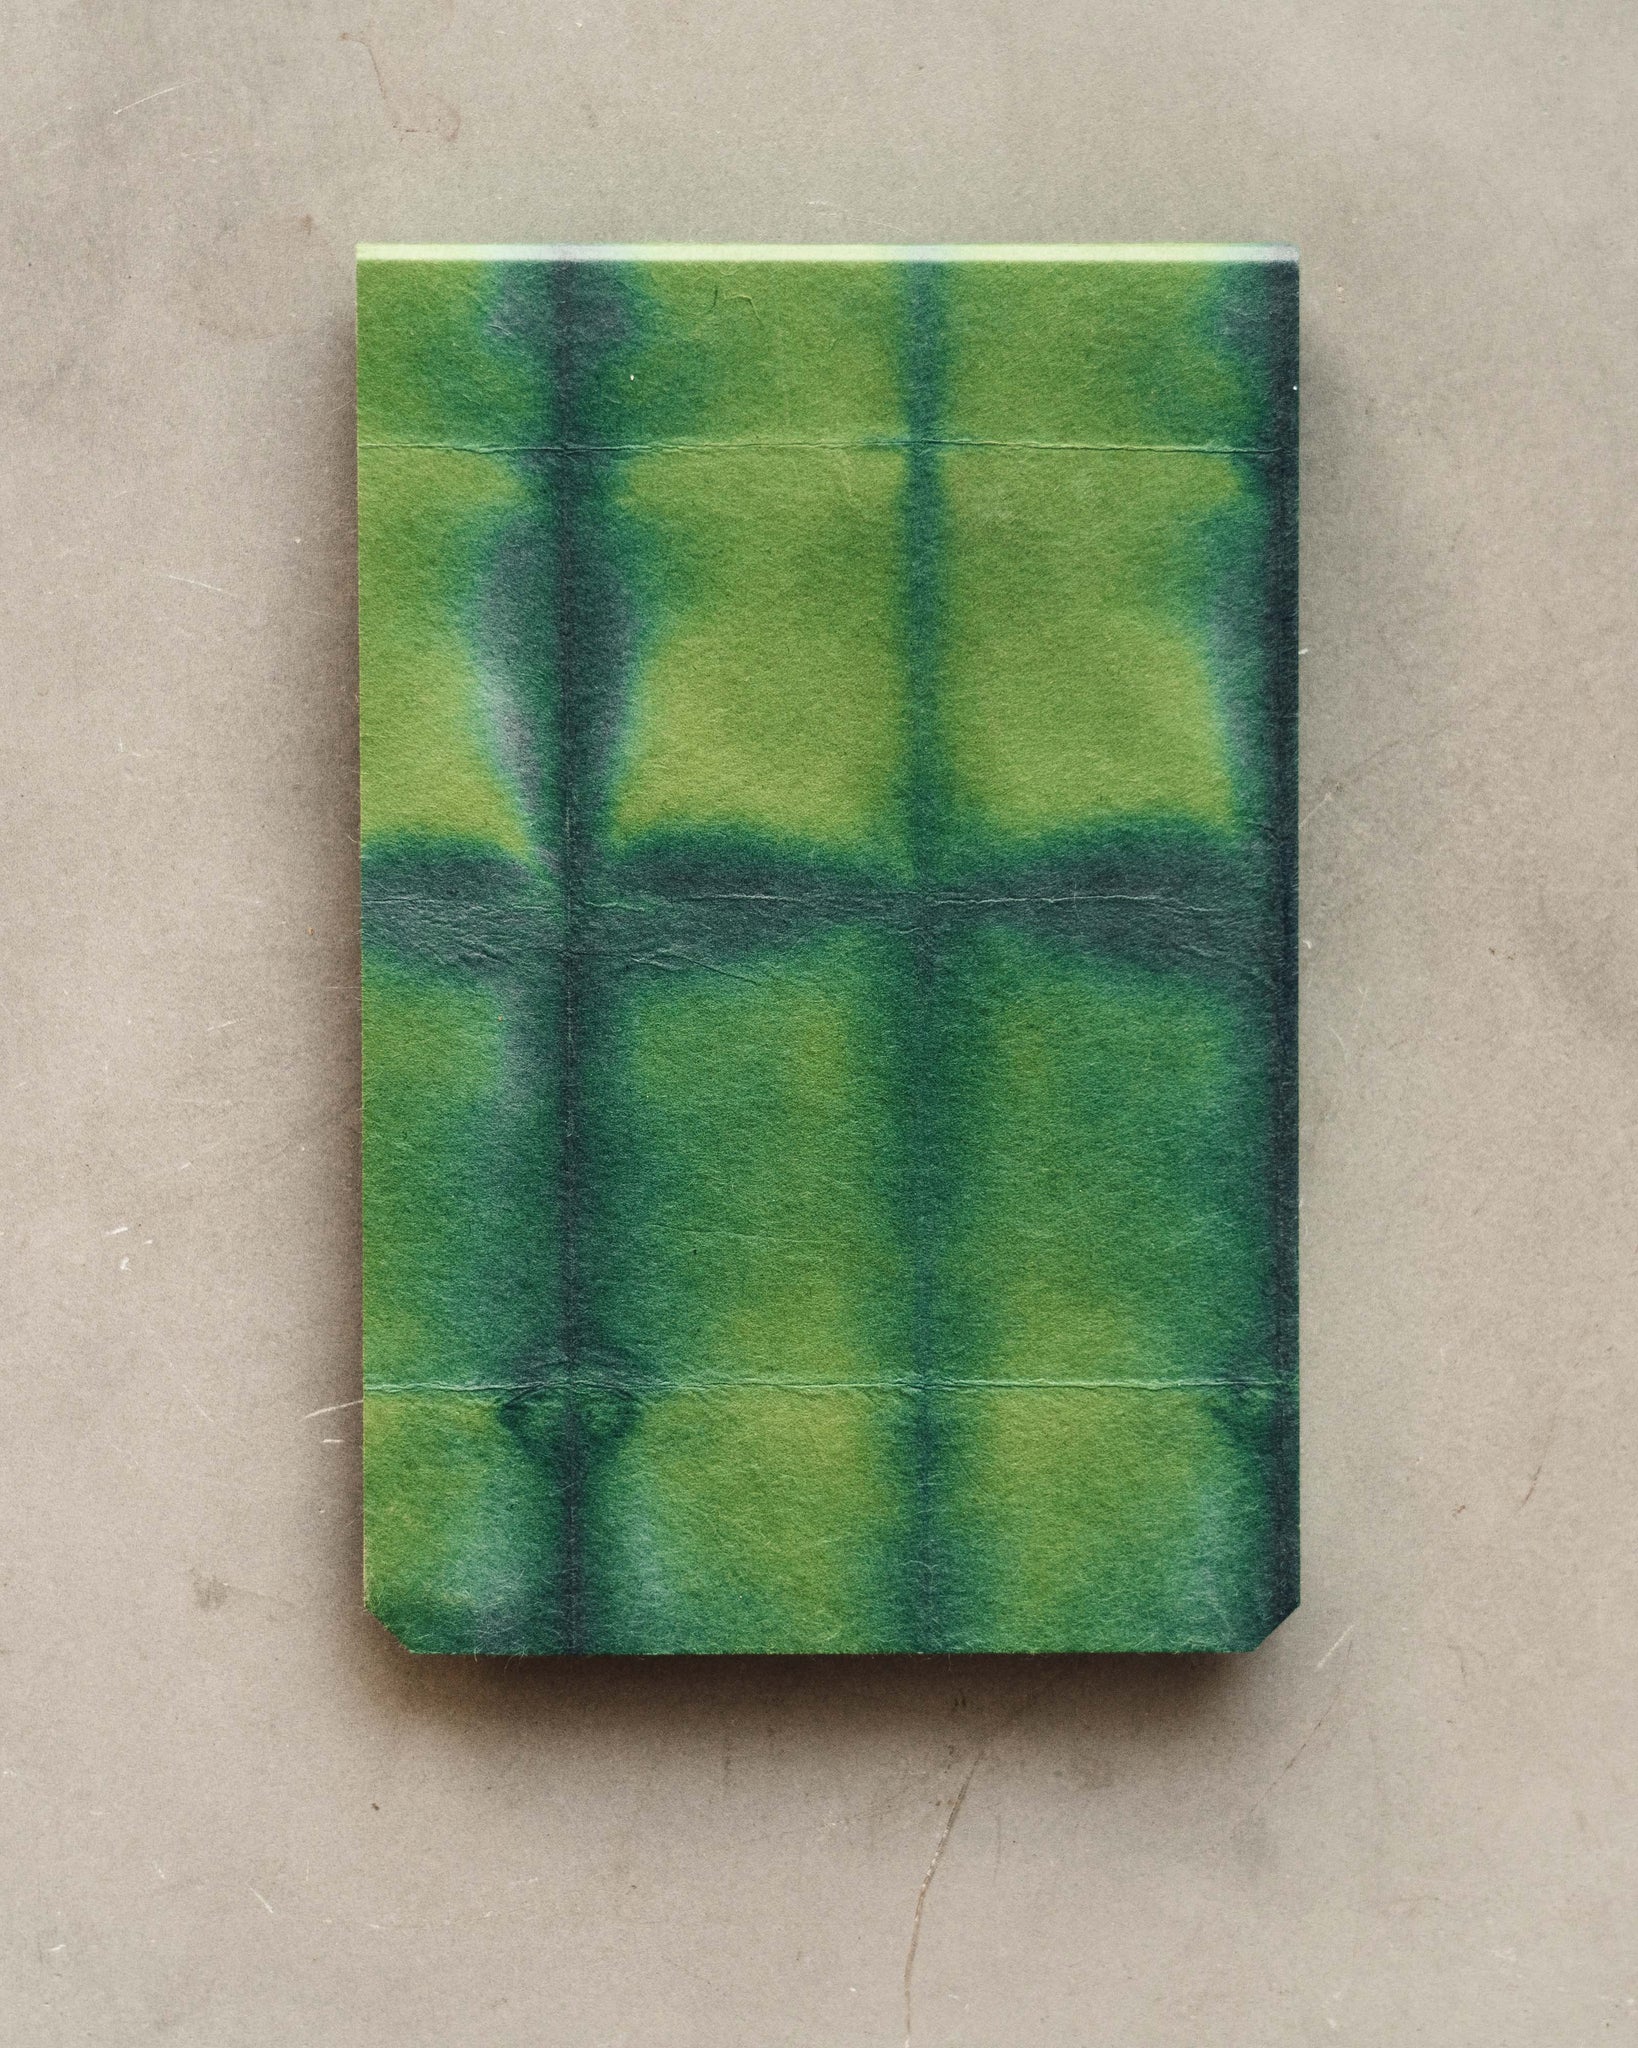 Postalco Square Dyed Notebooks